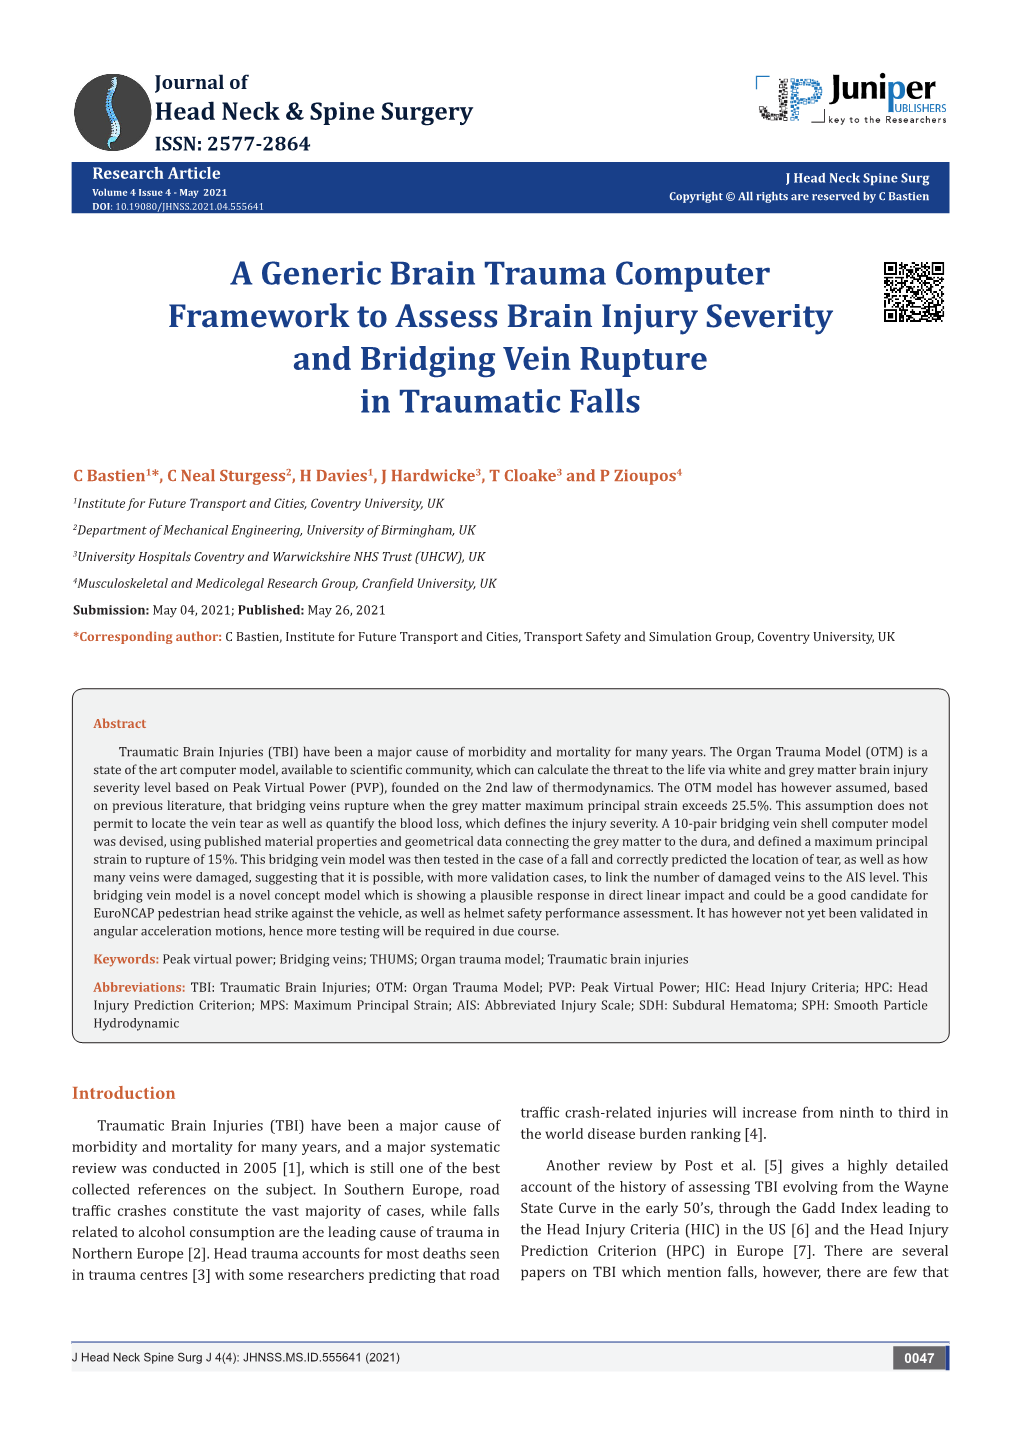 A Generic Brain Trauma Computer Framework to Assess Brain Injury Severity and Bridging Vein Rupture in Traumatic Falls